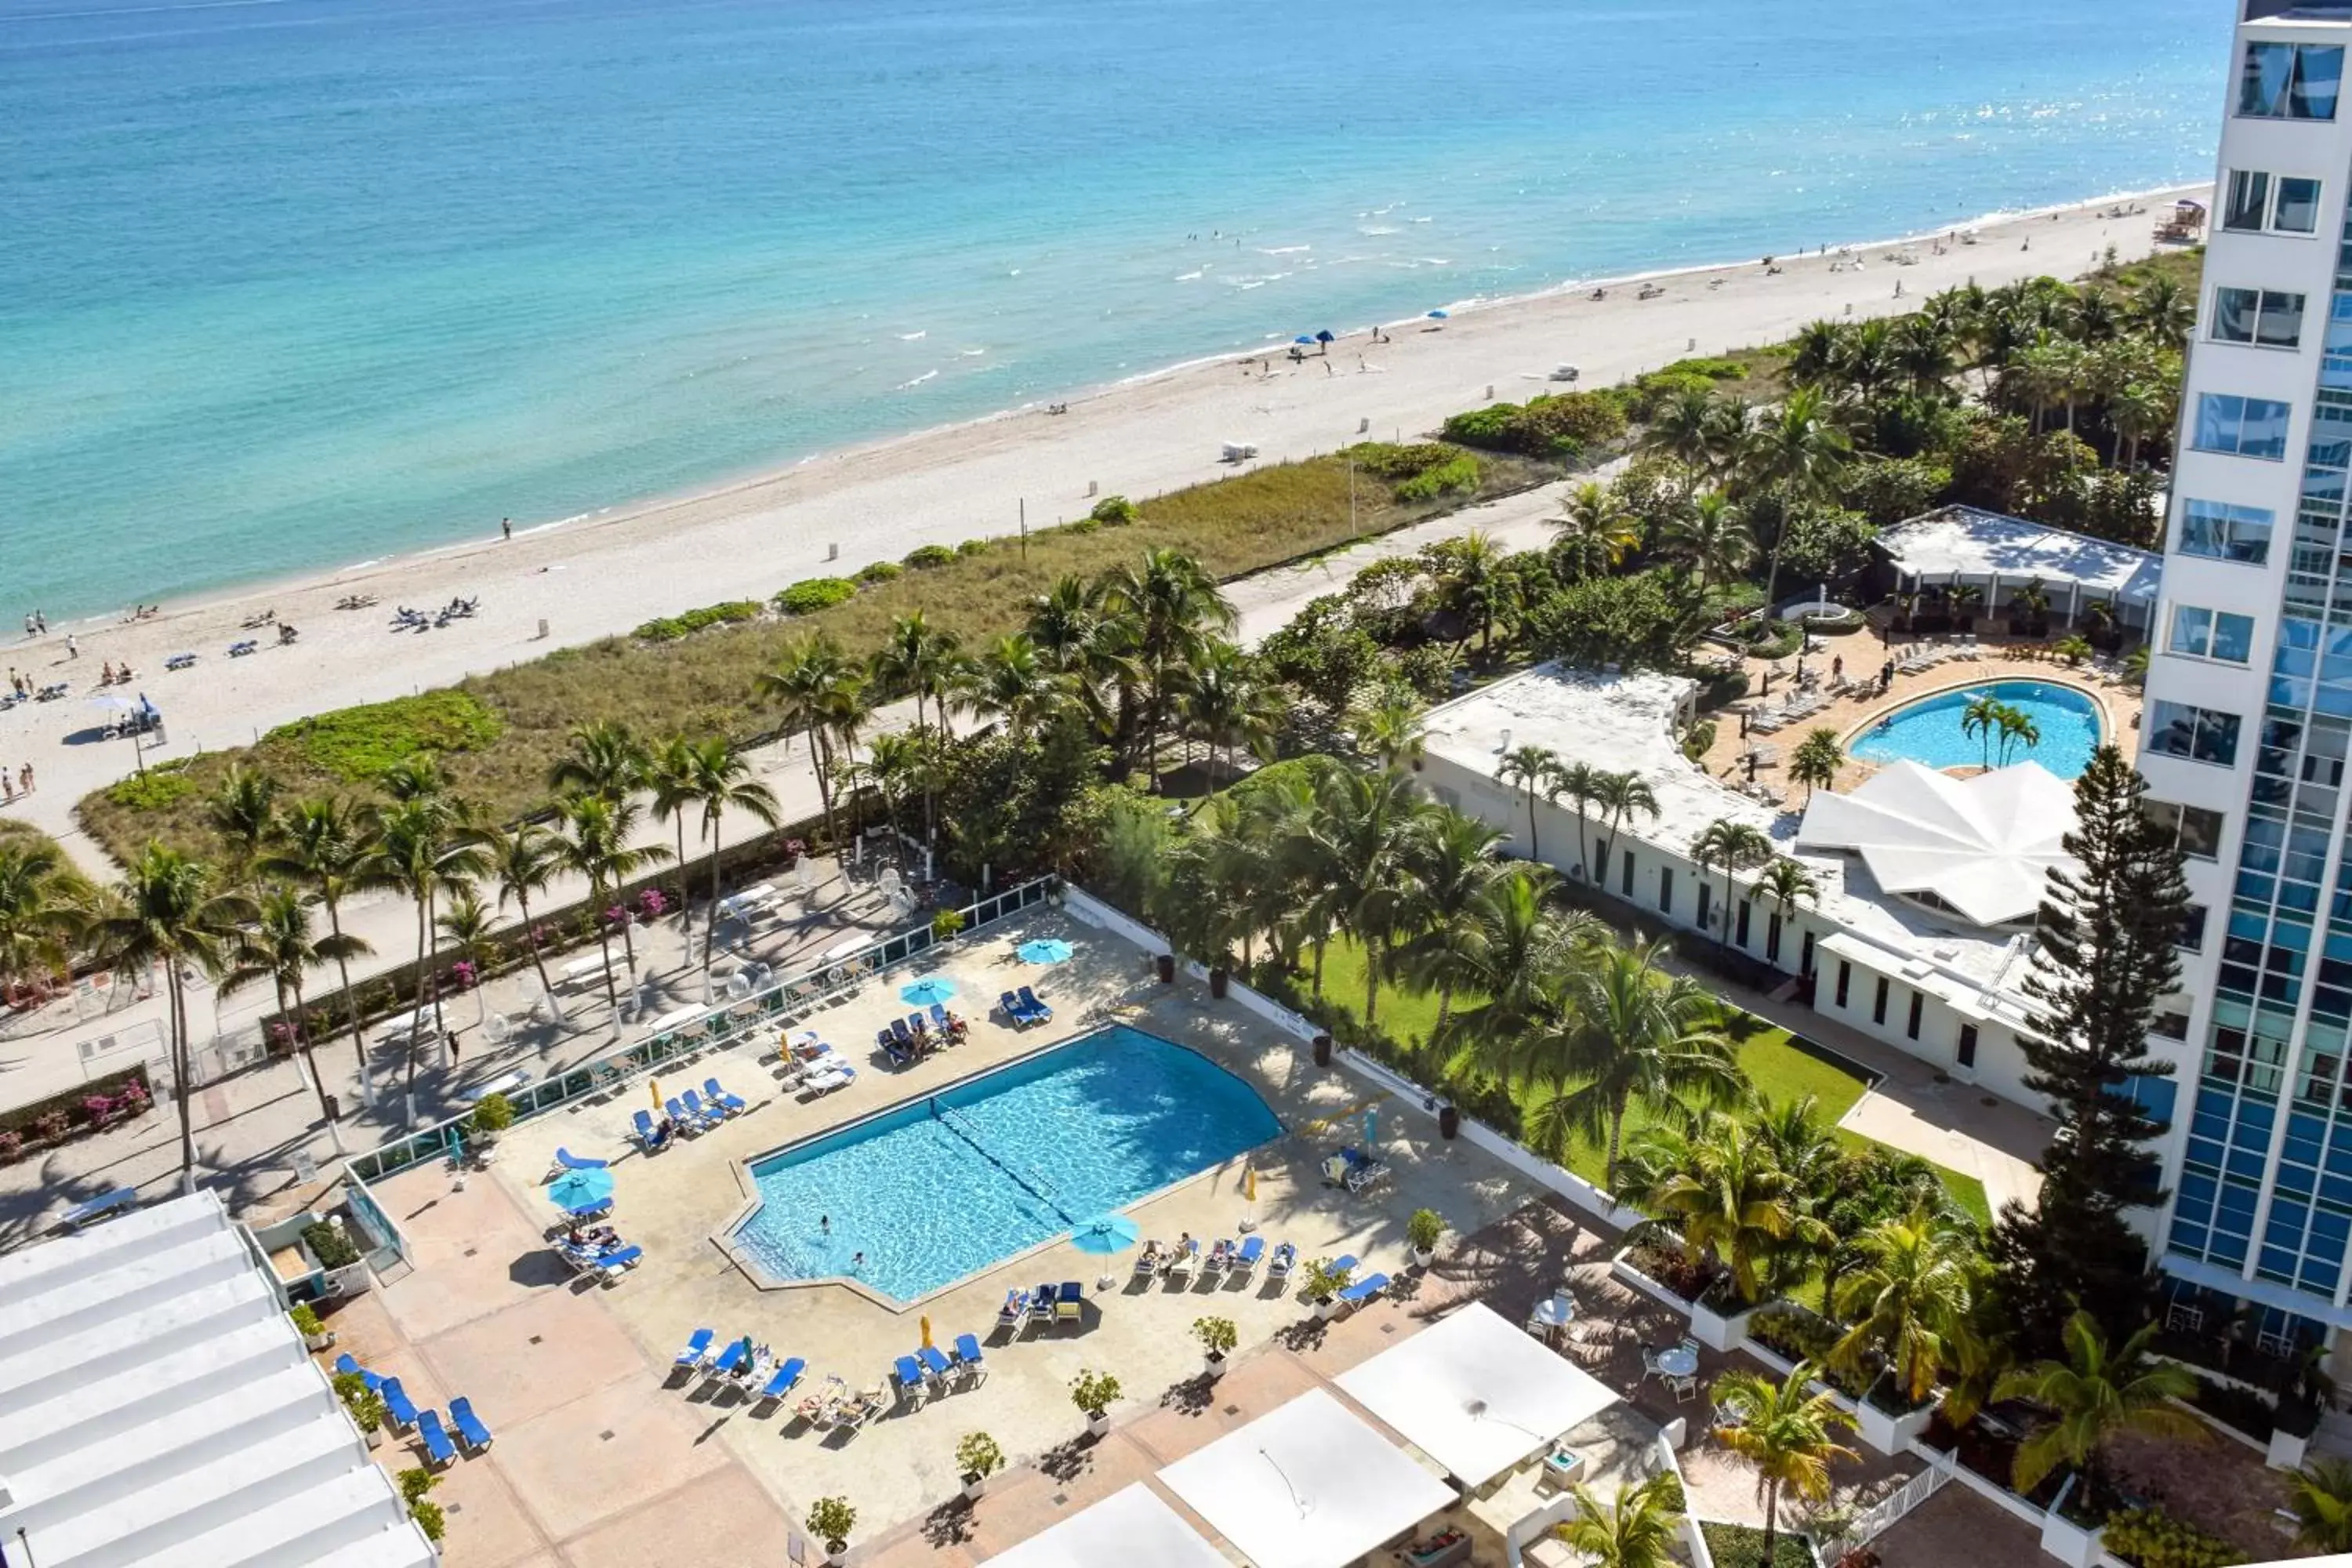 Bird's eye view, Bird's-eye View in Seacoast Suites on Miami Beach